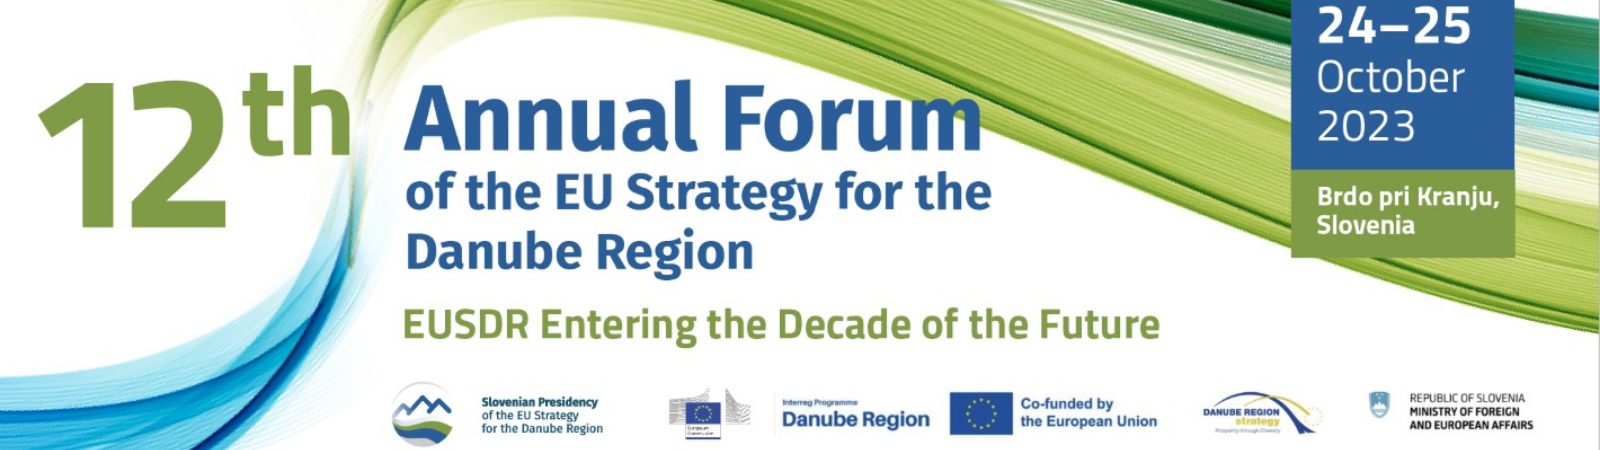 logotip letnega foruma EUSDR